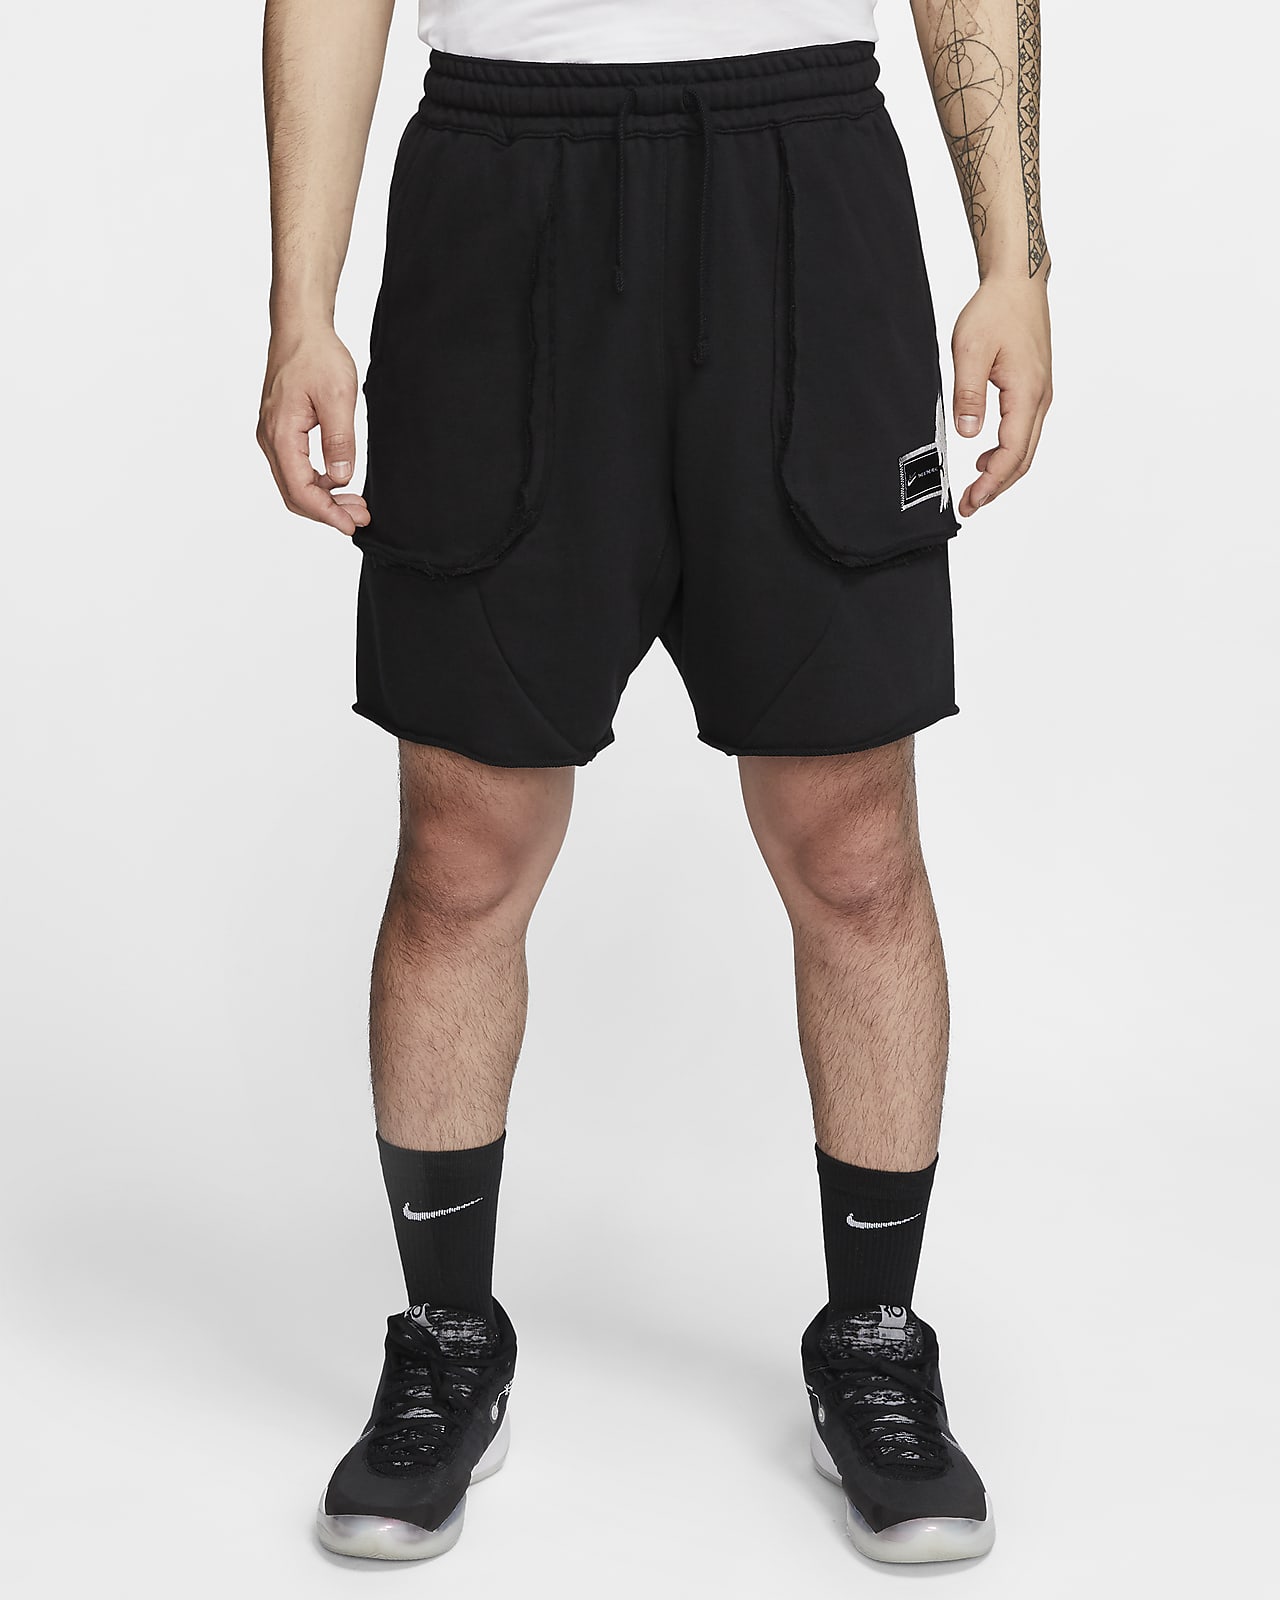 men's nike dry basketball shorts